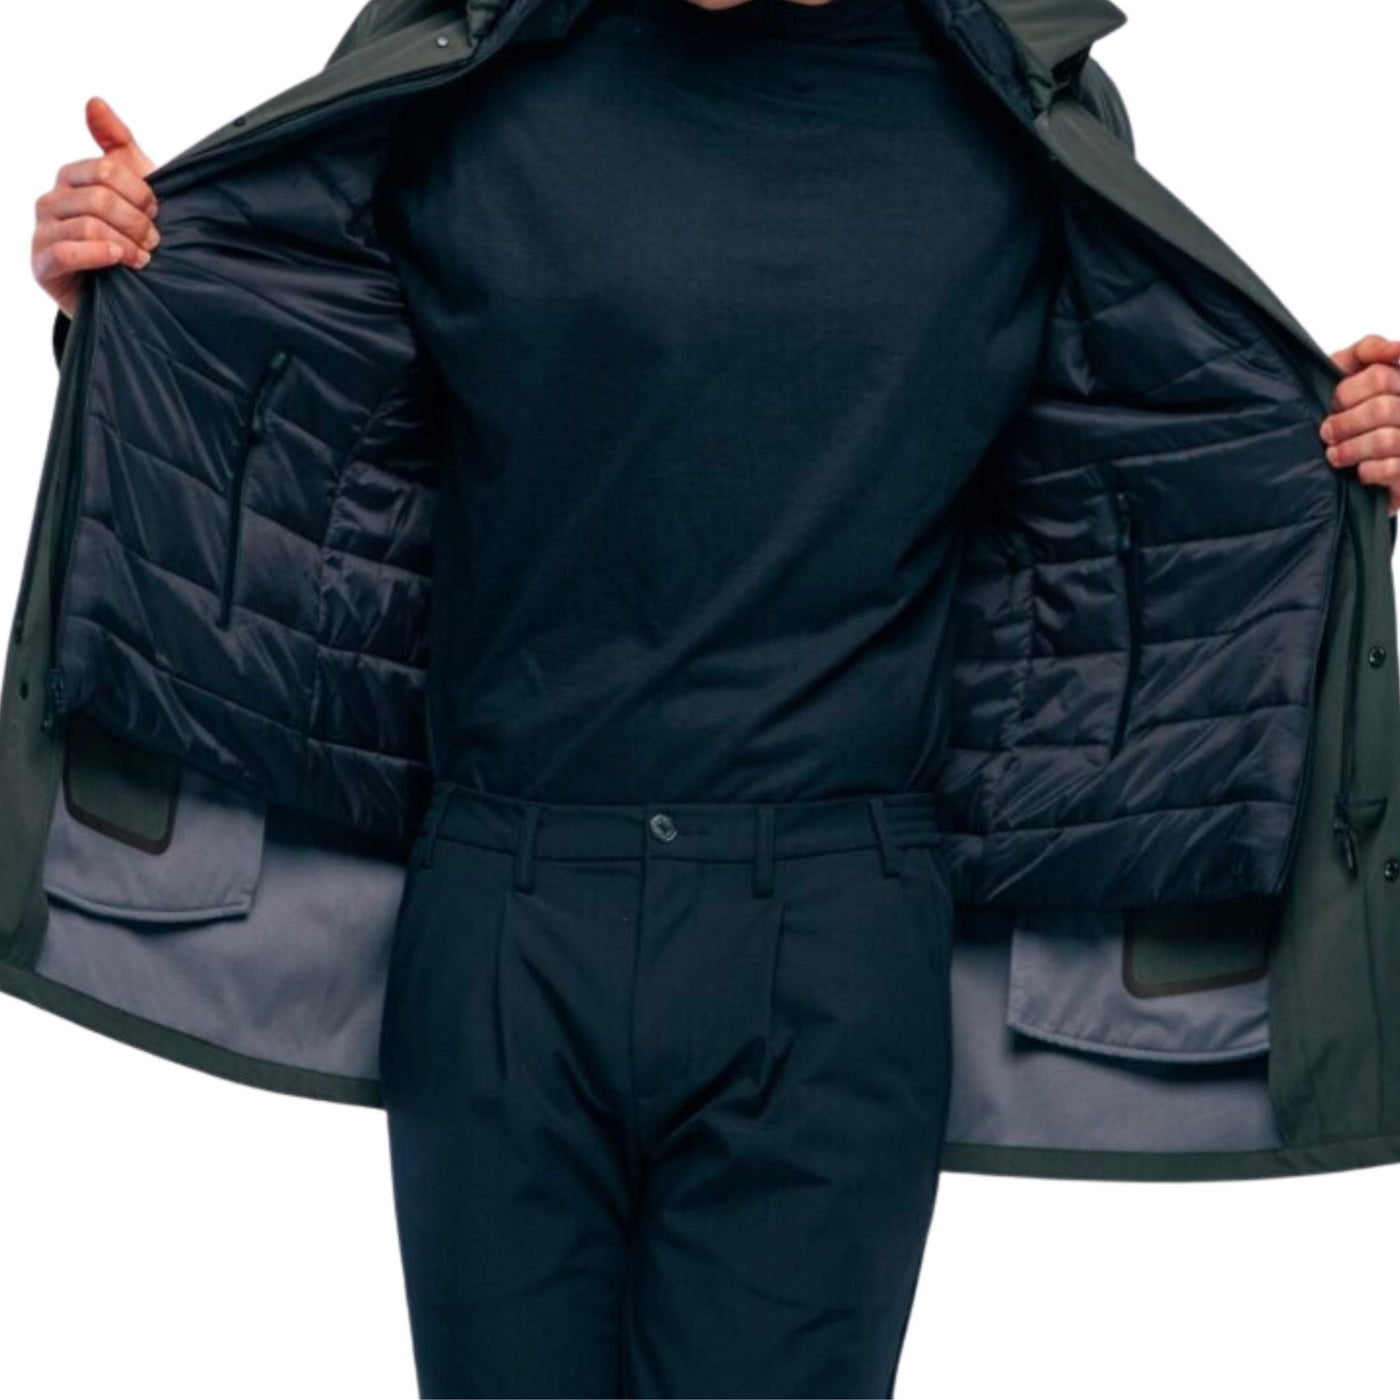 Men's jacket in technical fabric